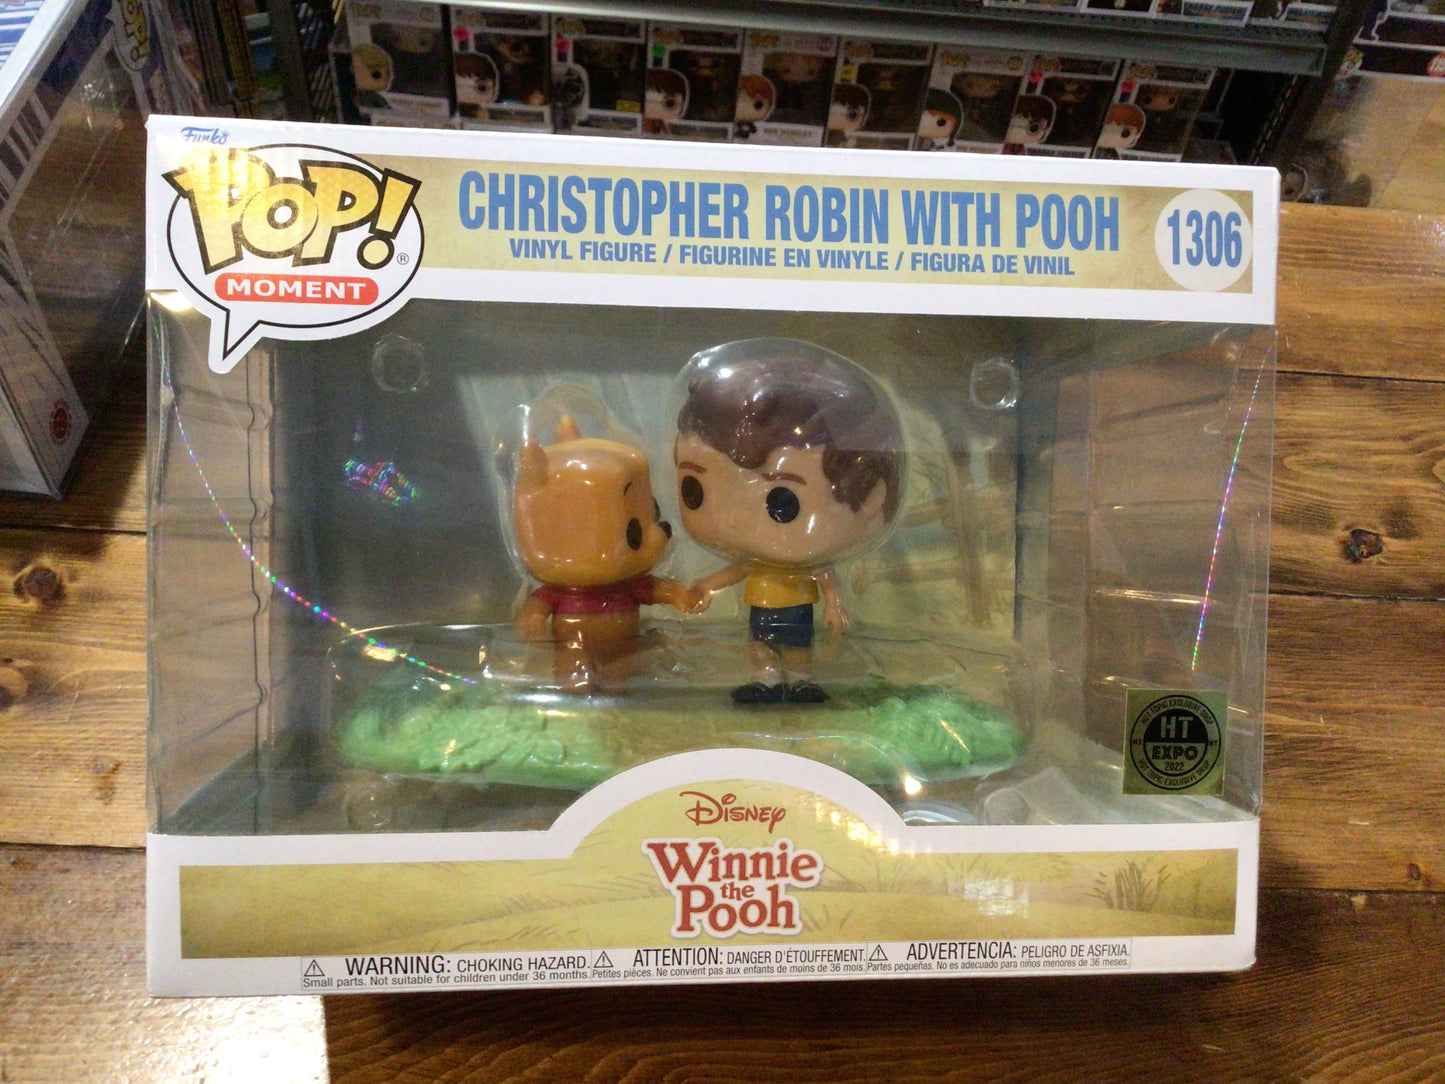 Disney moment- Winnie the Pooh with Christopher robin #1306 - Funko Pop! Vinyl figure